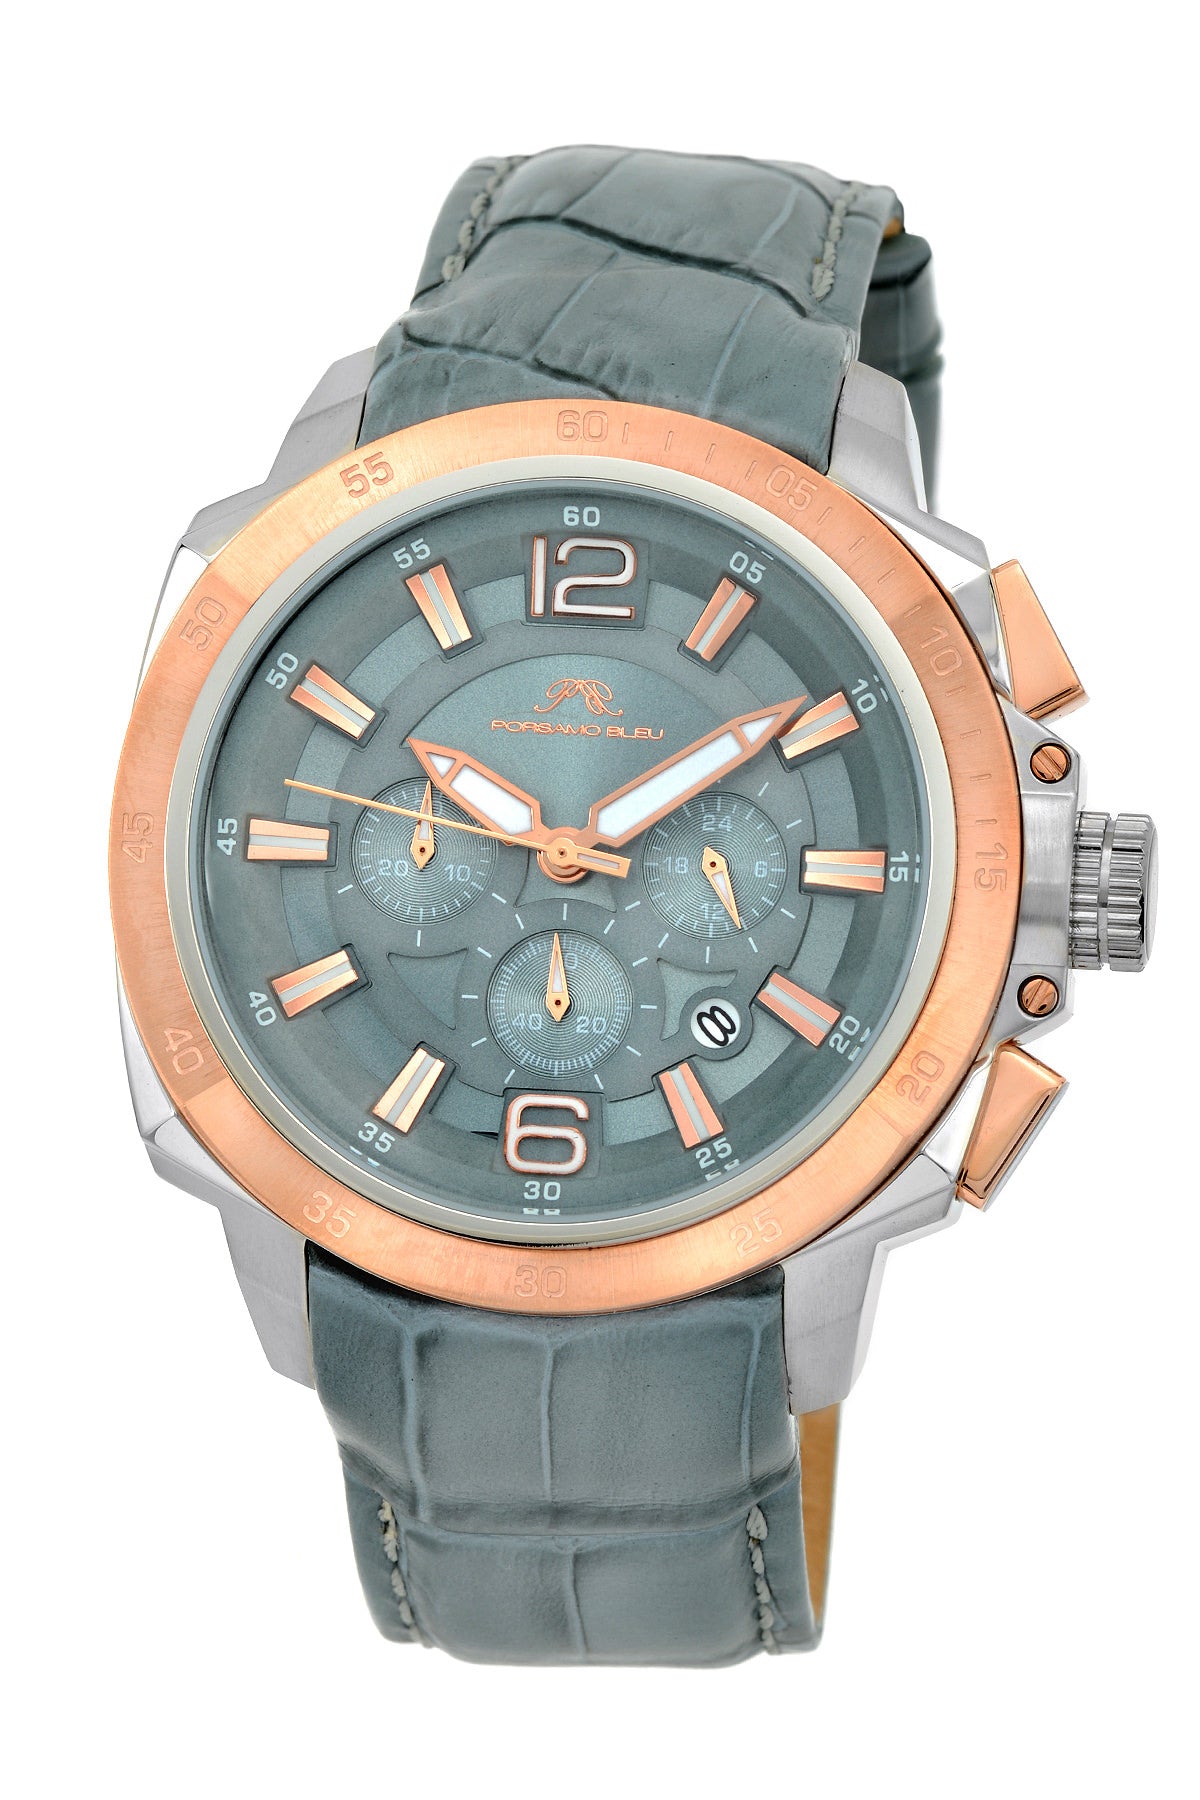 Porsamo Bleu Olivier luxury chronograph men's watch, genuine leather band, rose, grey 322AOLL